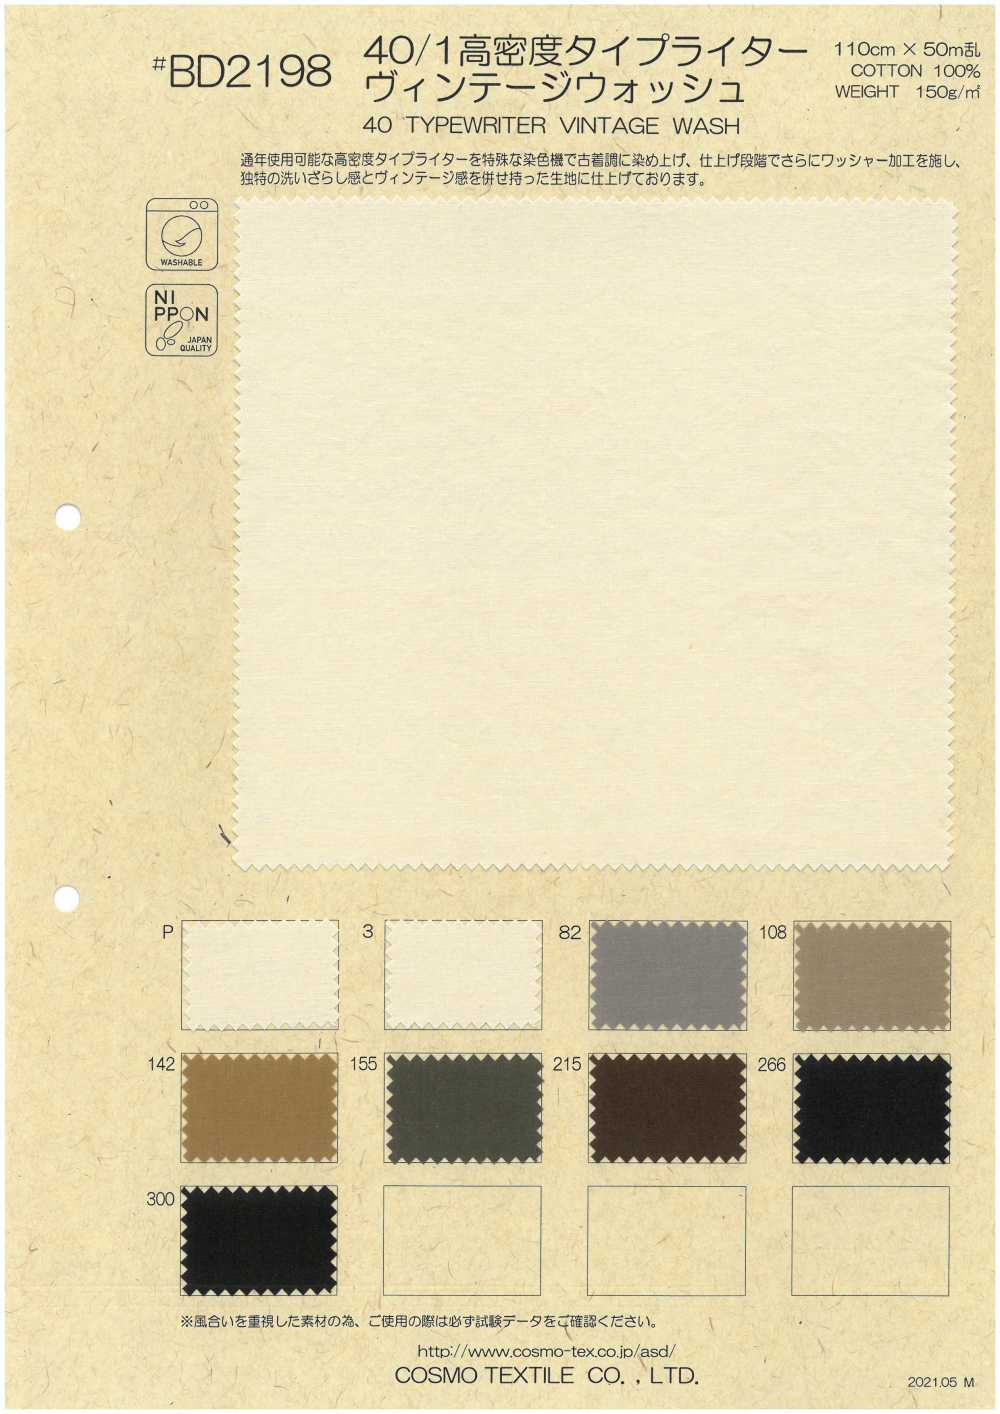 BD2198 [OUTLET] 40/1 高密度高密度平织Vintage Wash[面料] Cosmo Textile 日本